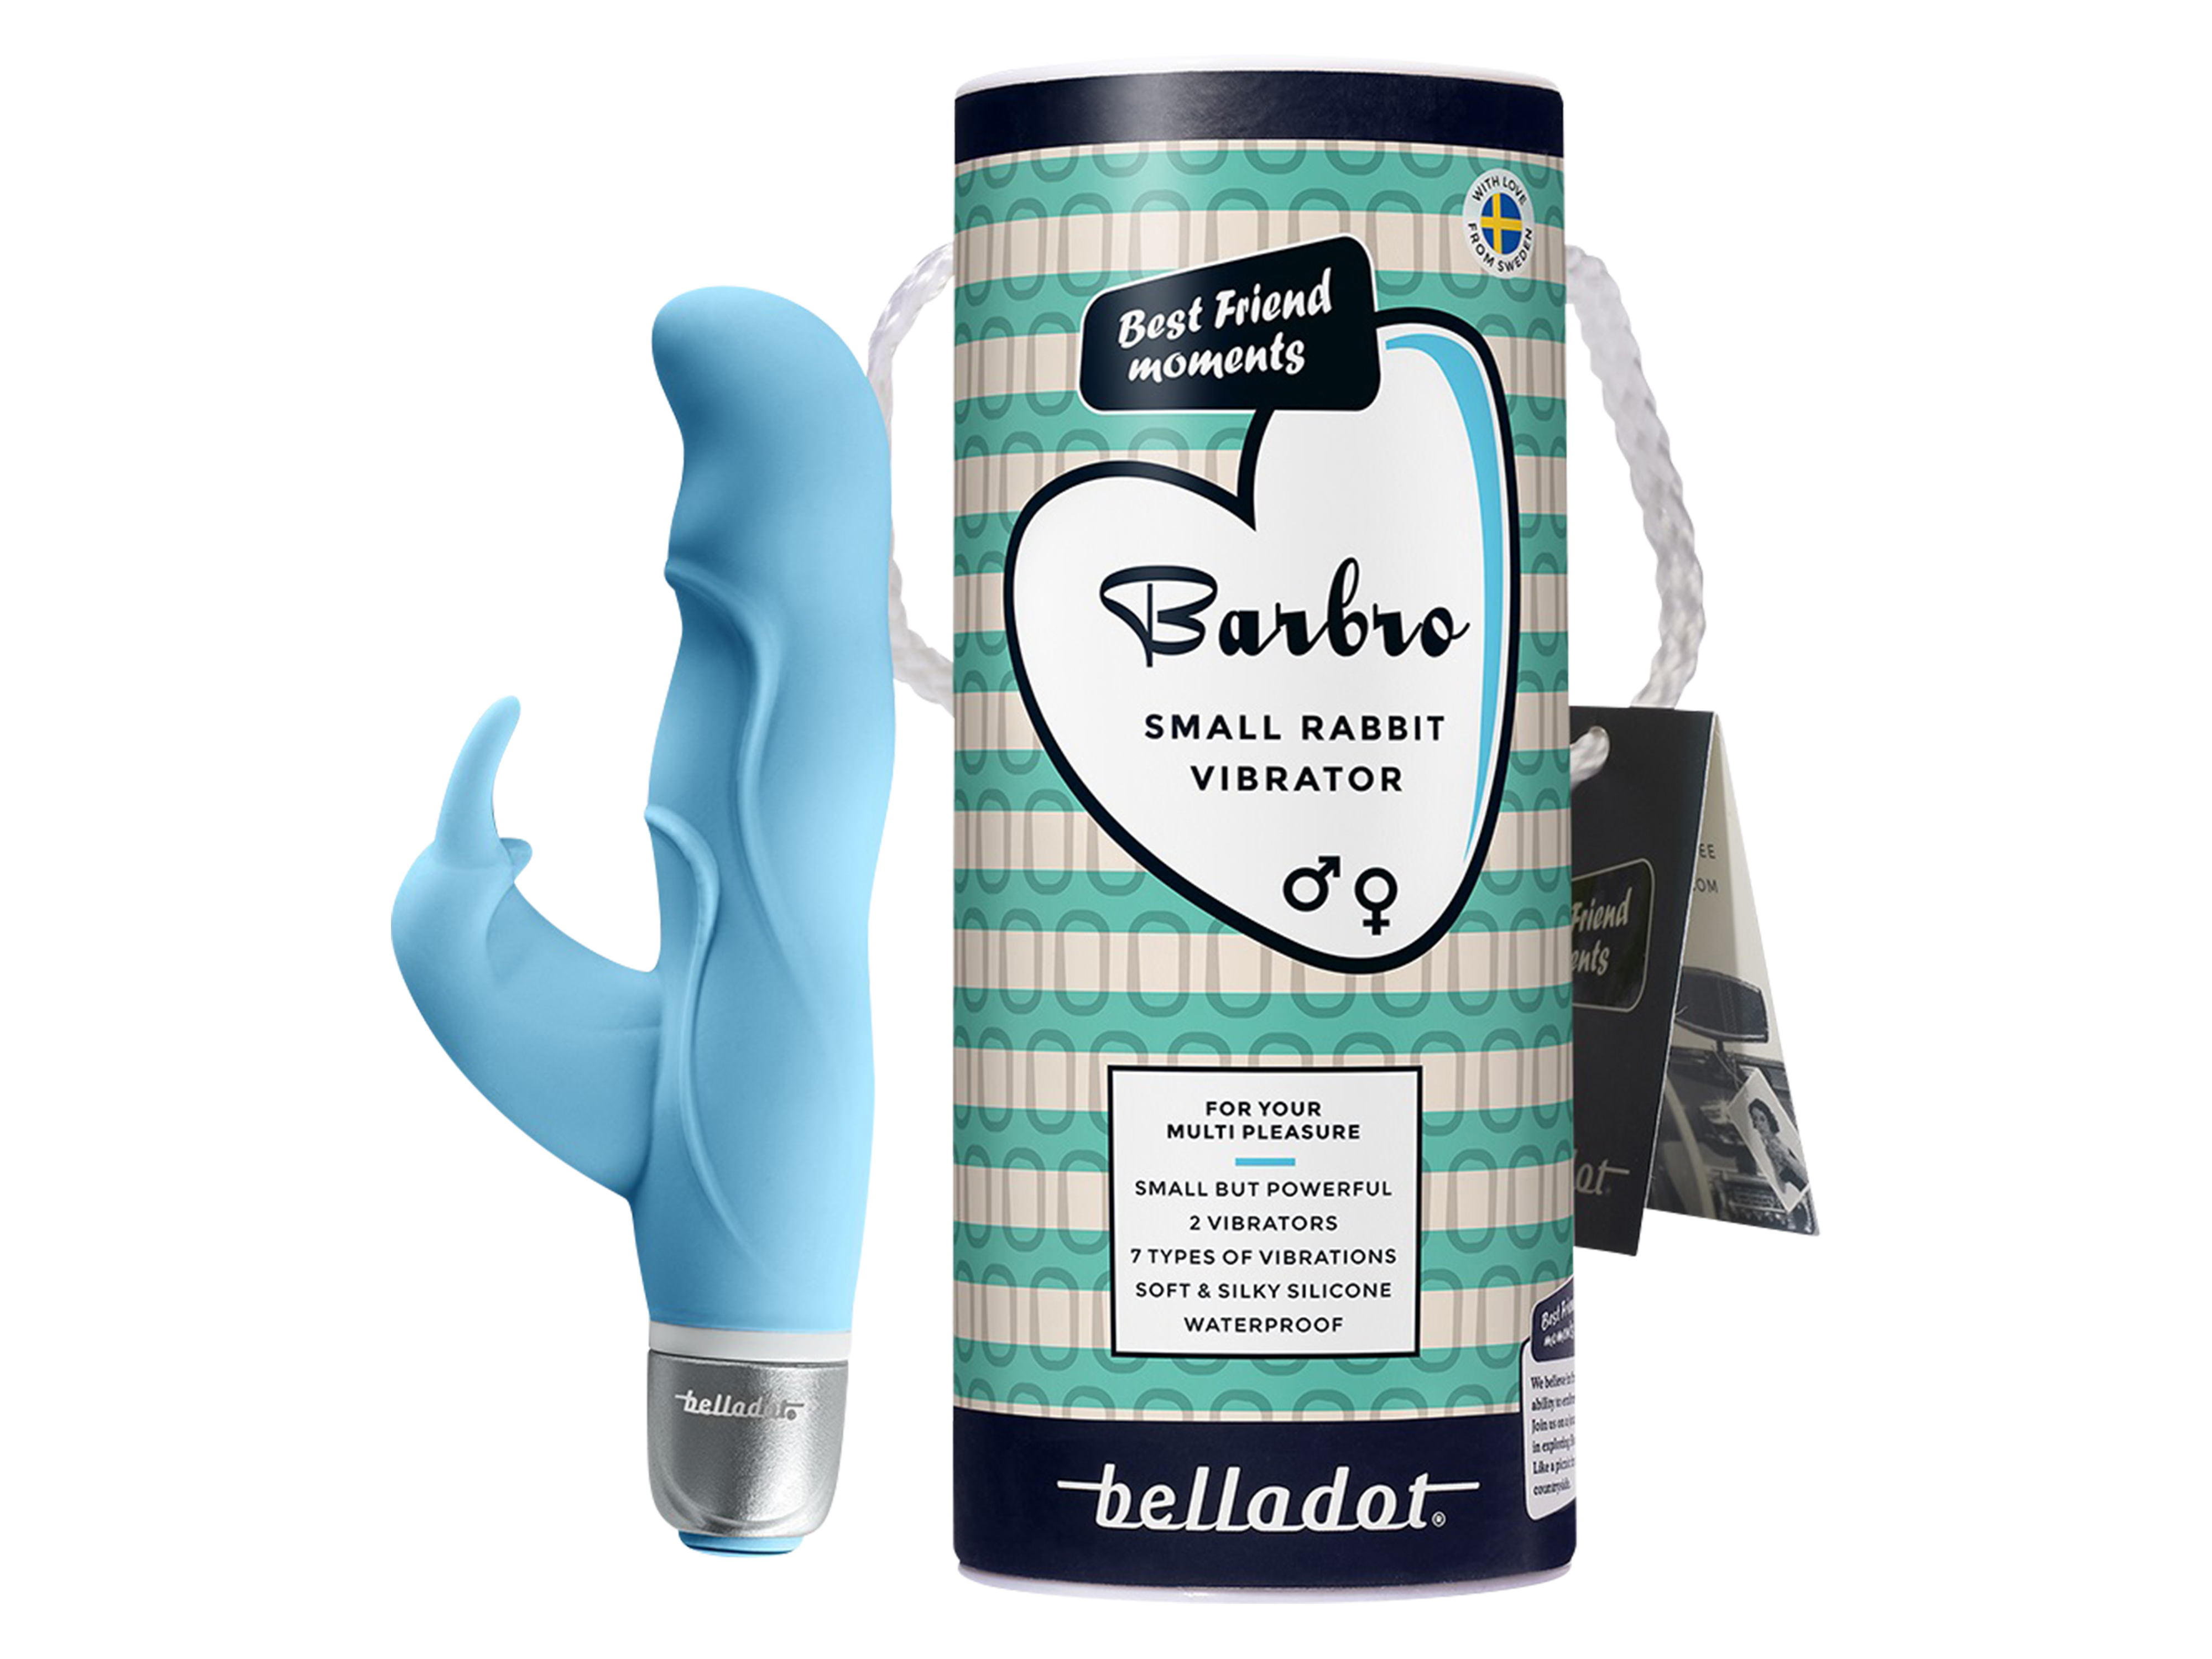 Belladot Barbro Small Rabbit Vibrator, Blå, 1 stk.